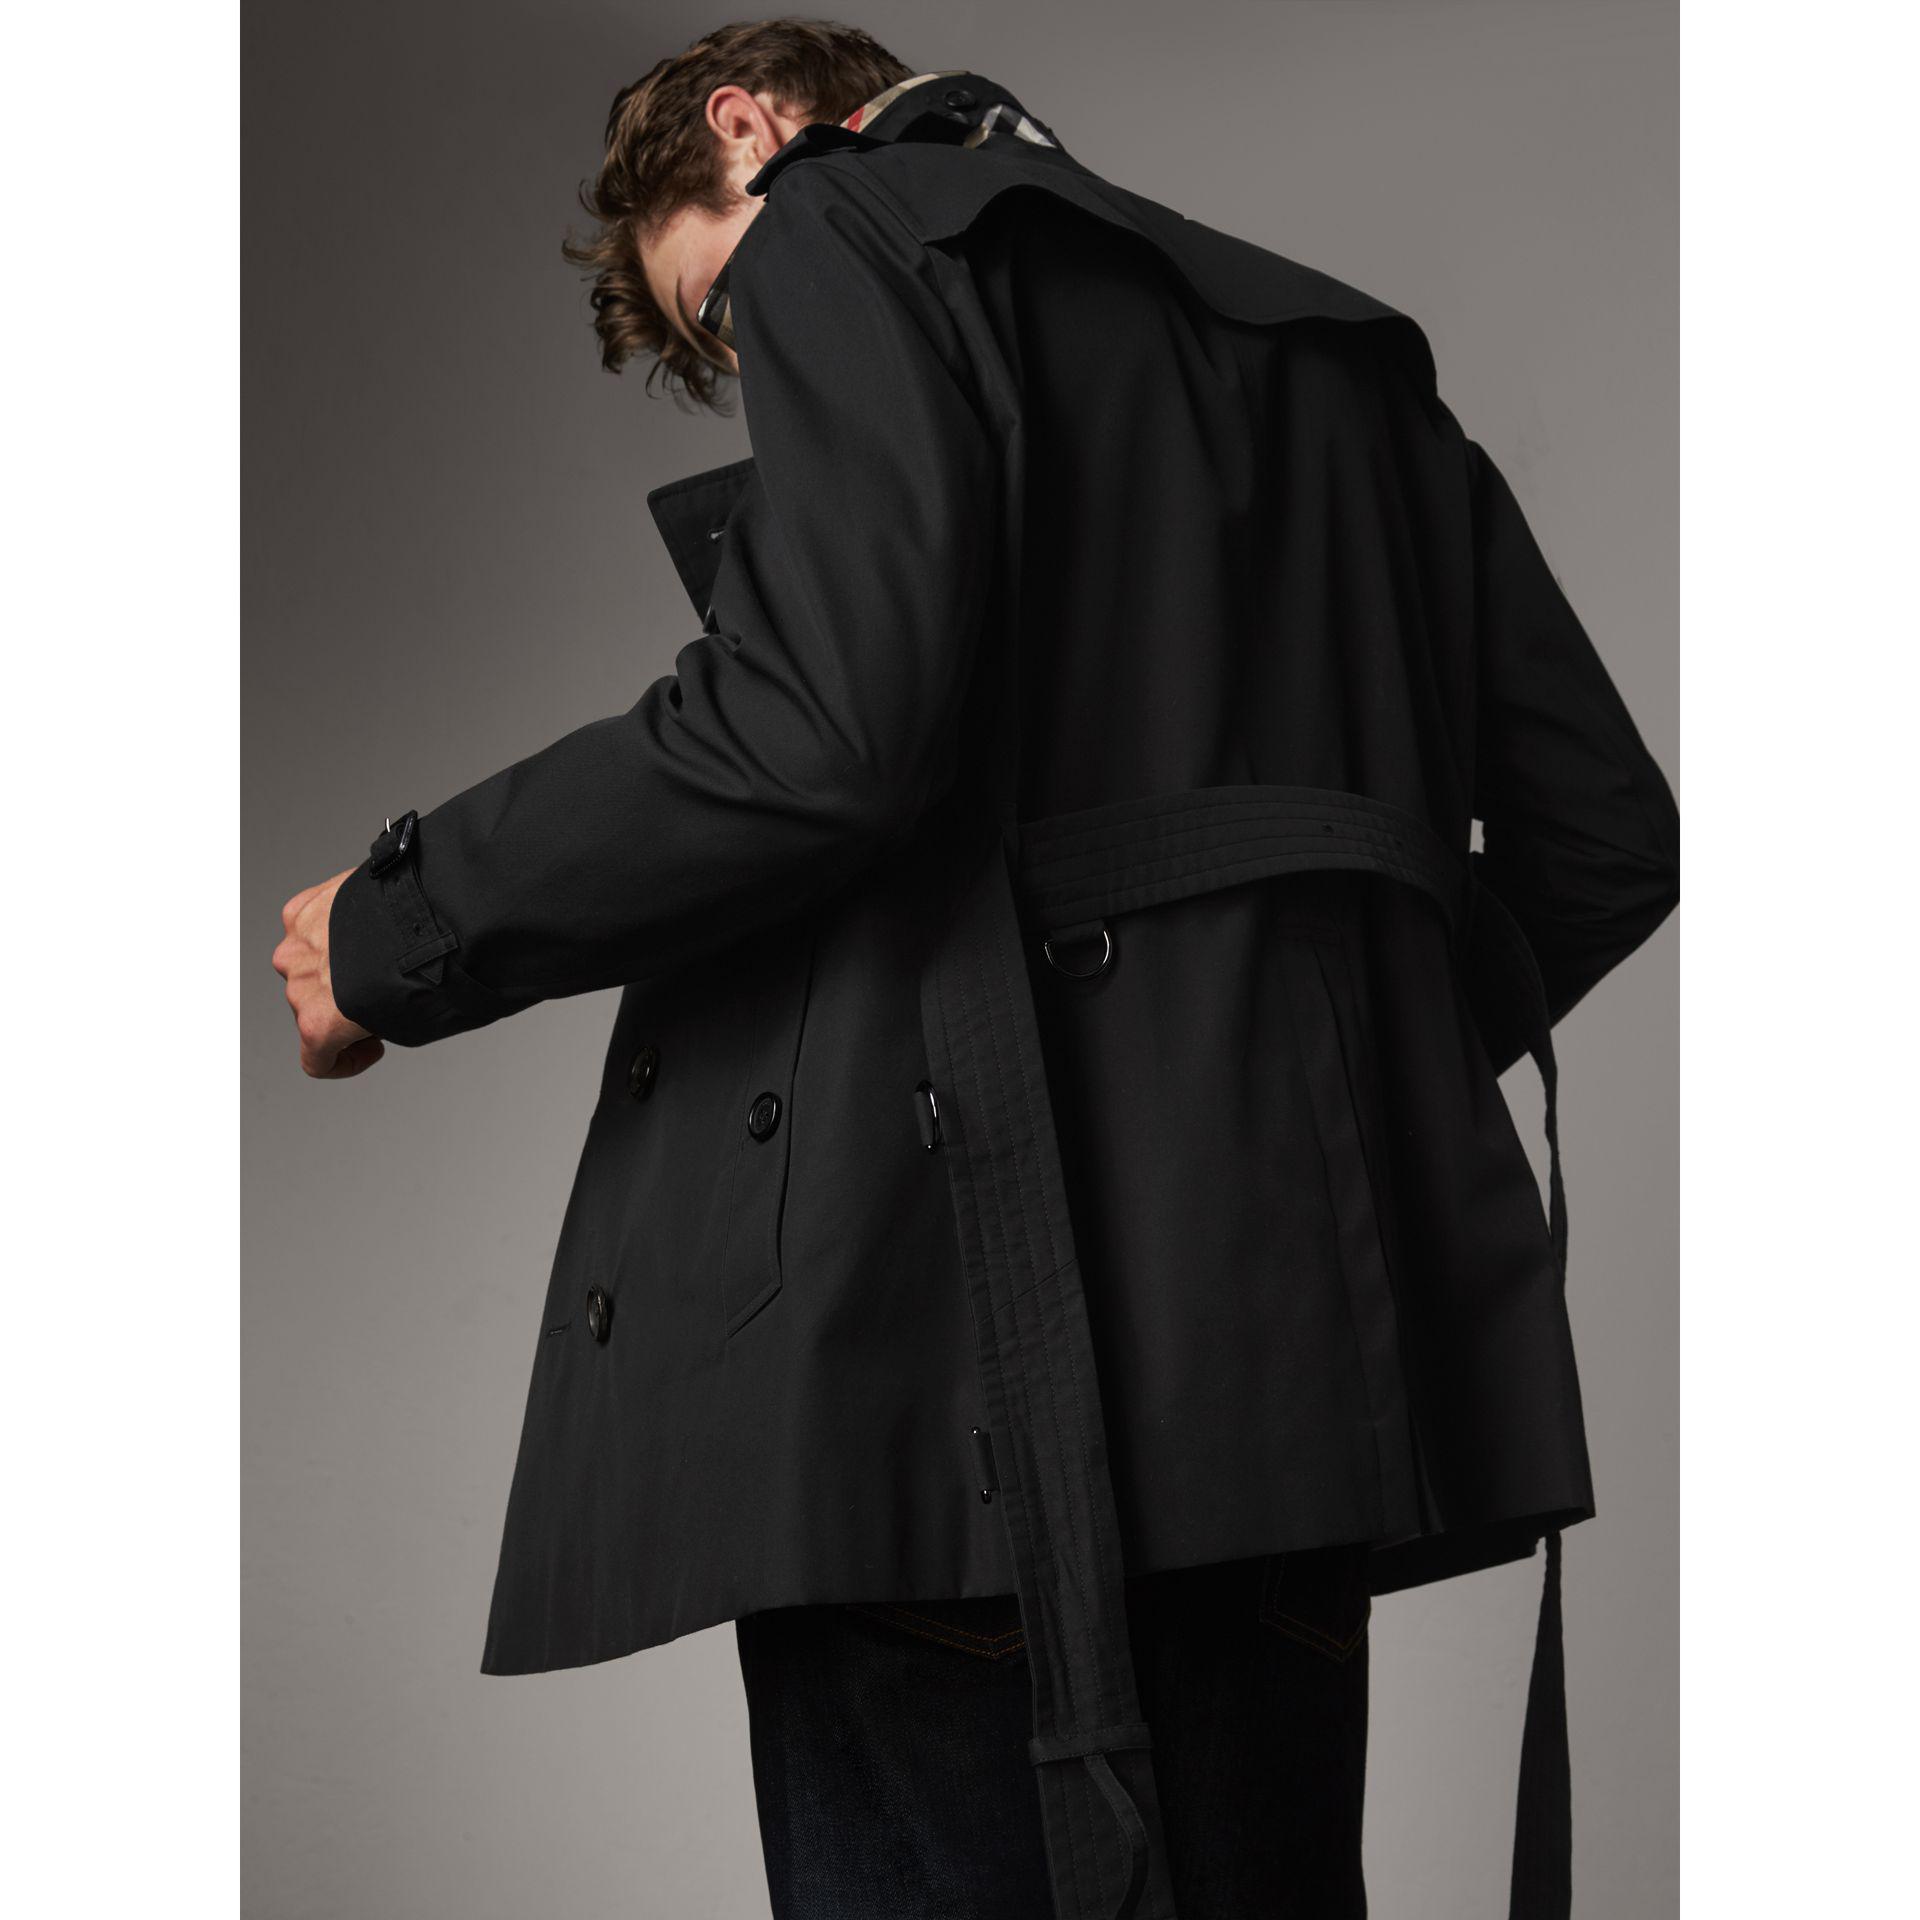 Burberry The Chelsea – Short Trench Coat in Black for Men - Lyst